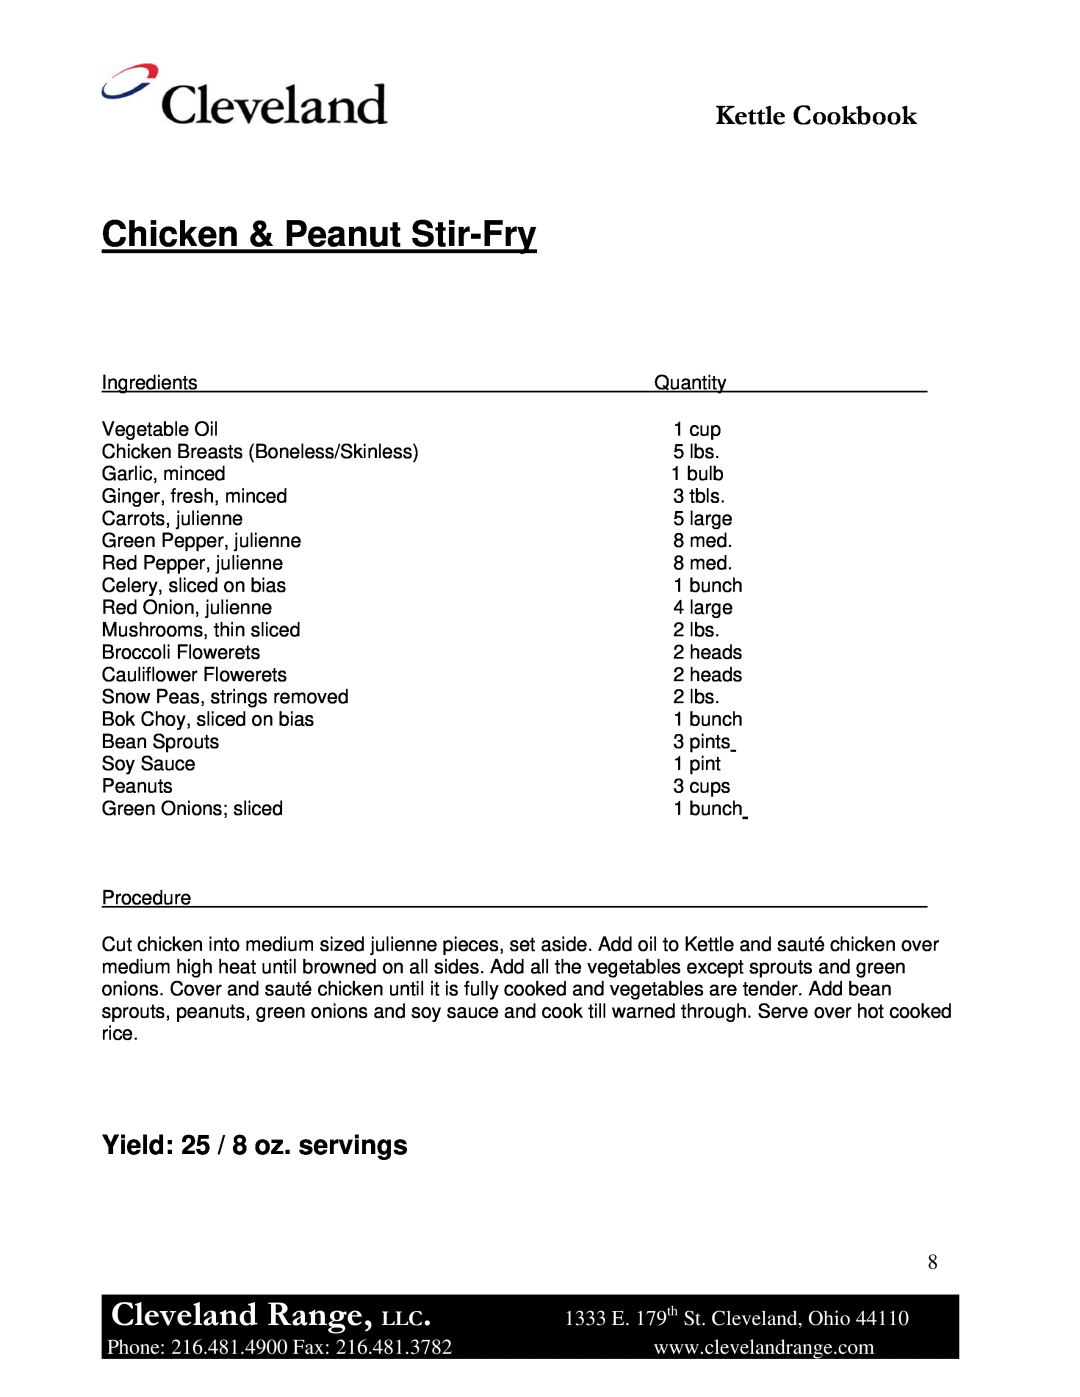 Cleveland Range Steam Jacketed Kettle manual Chicken & Peanut Stir-Fry, Yield 25 / 8 oz. servings, Cleveland Range, LLC 